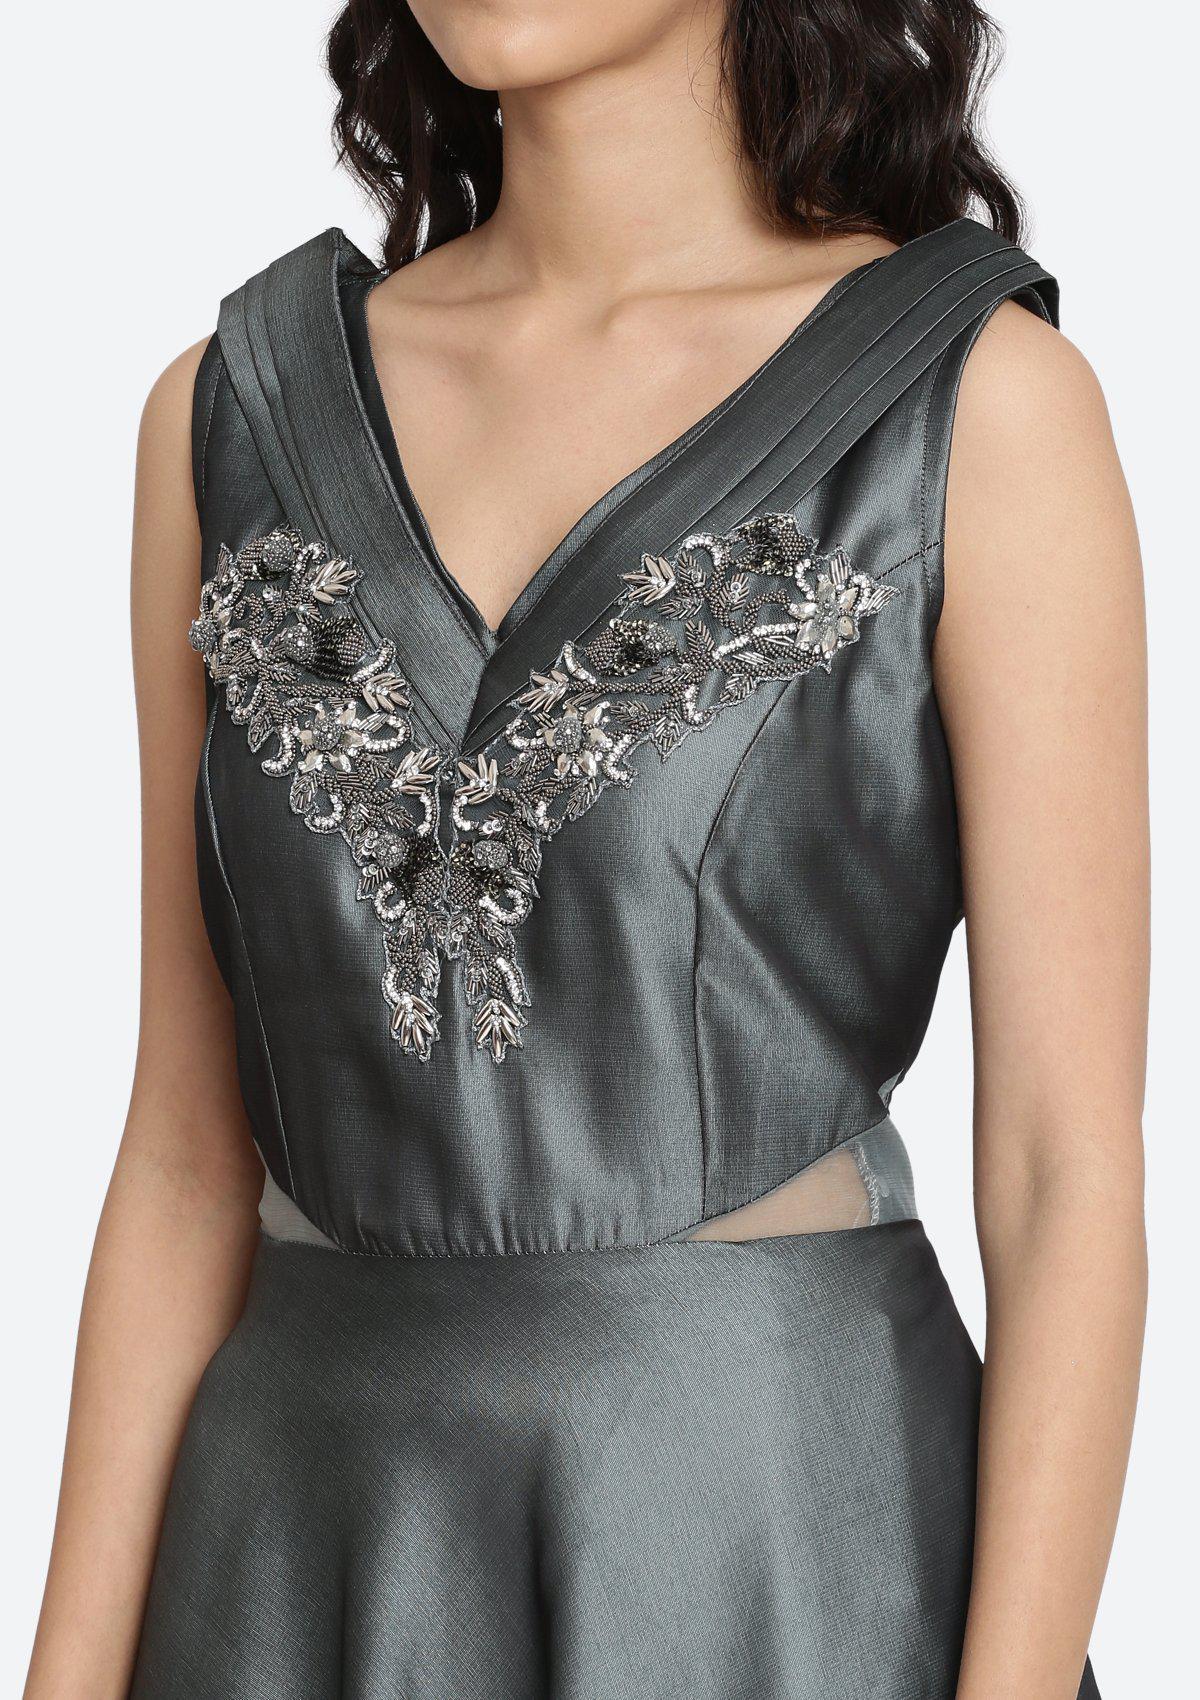 Mehendi Cutdana Taffeta Silk Designer Gown-Koskii